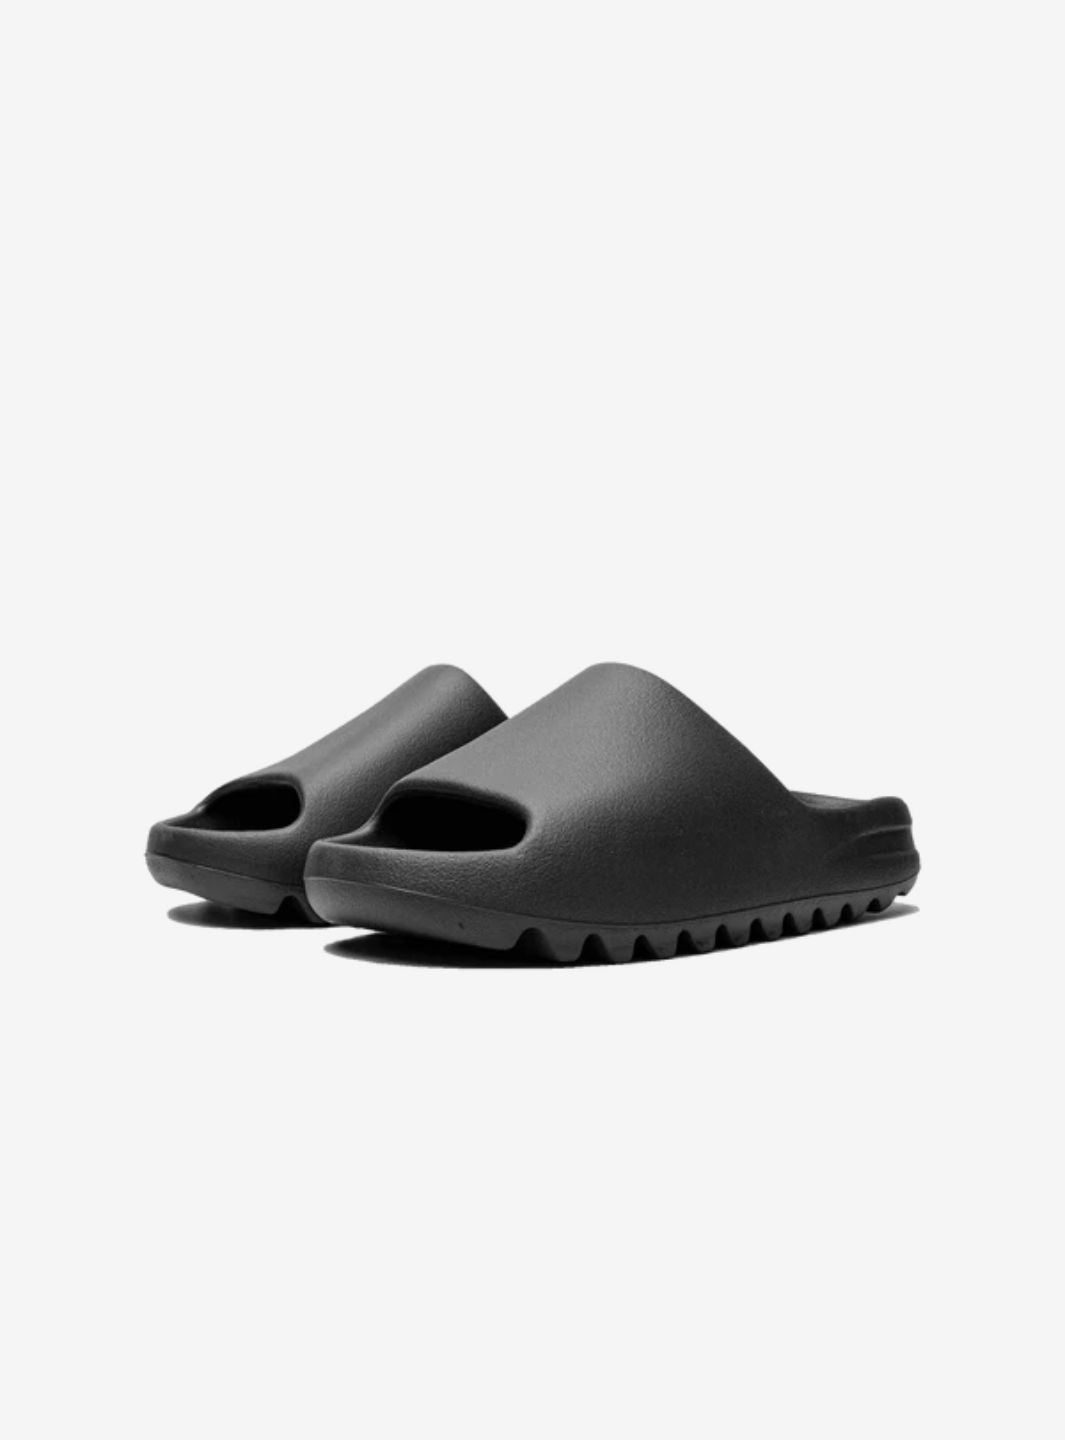 Adidas Yeezy Slide Dark Onyx -  ID5103 | ResellZone